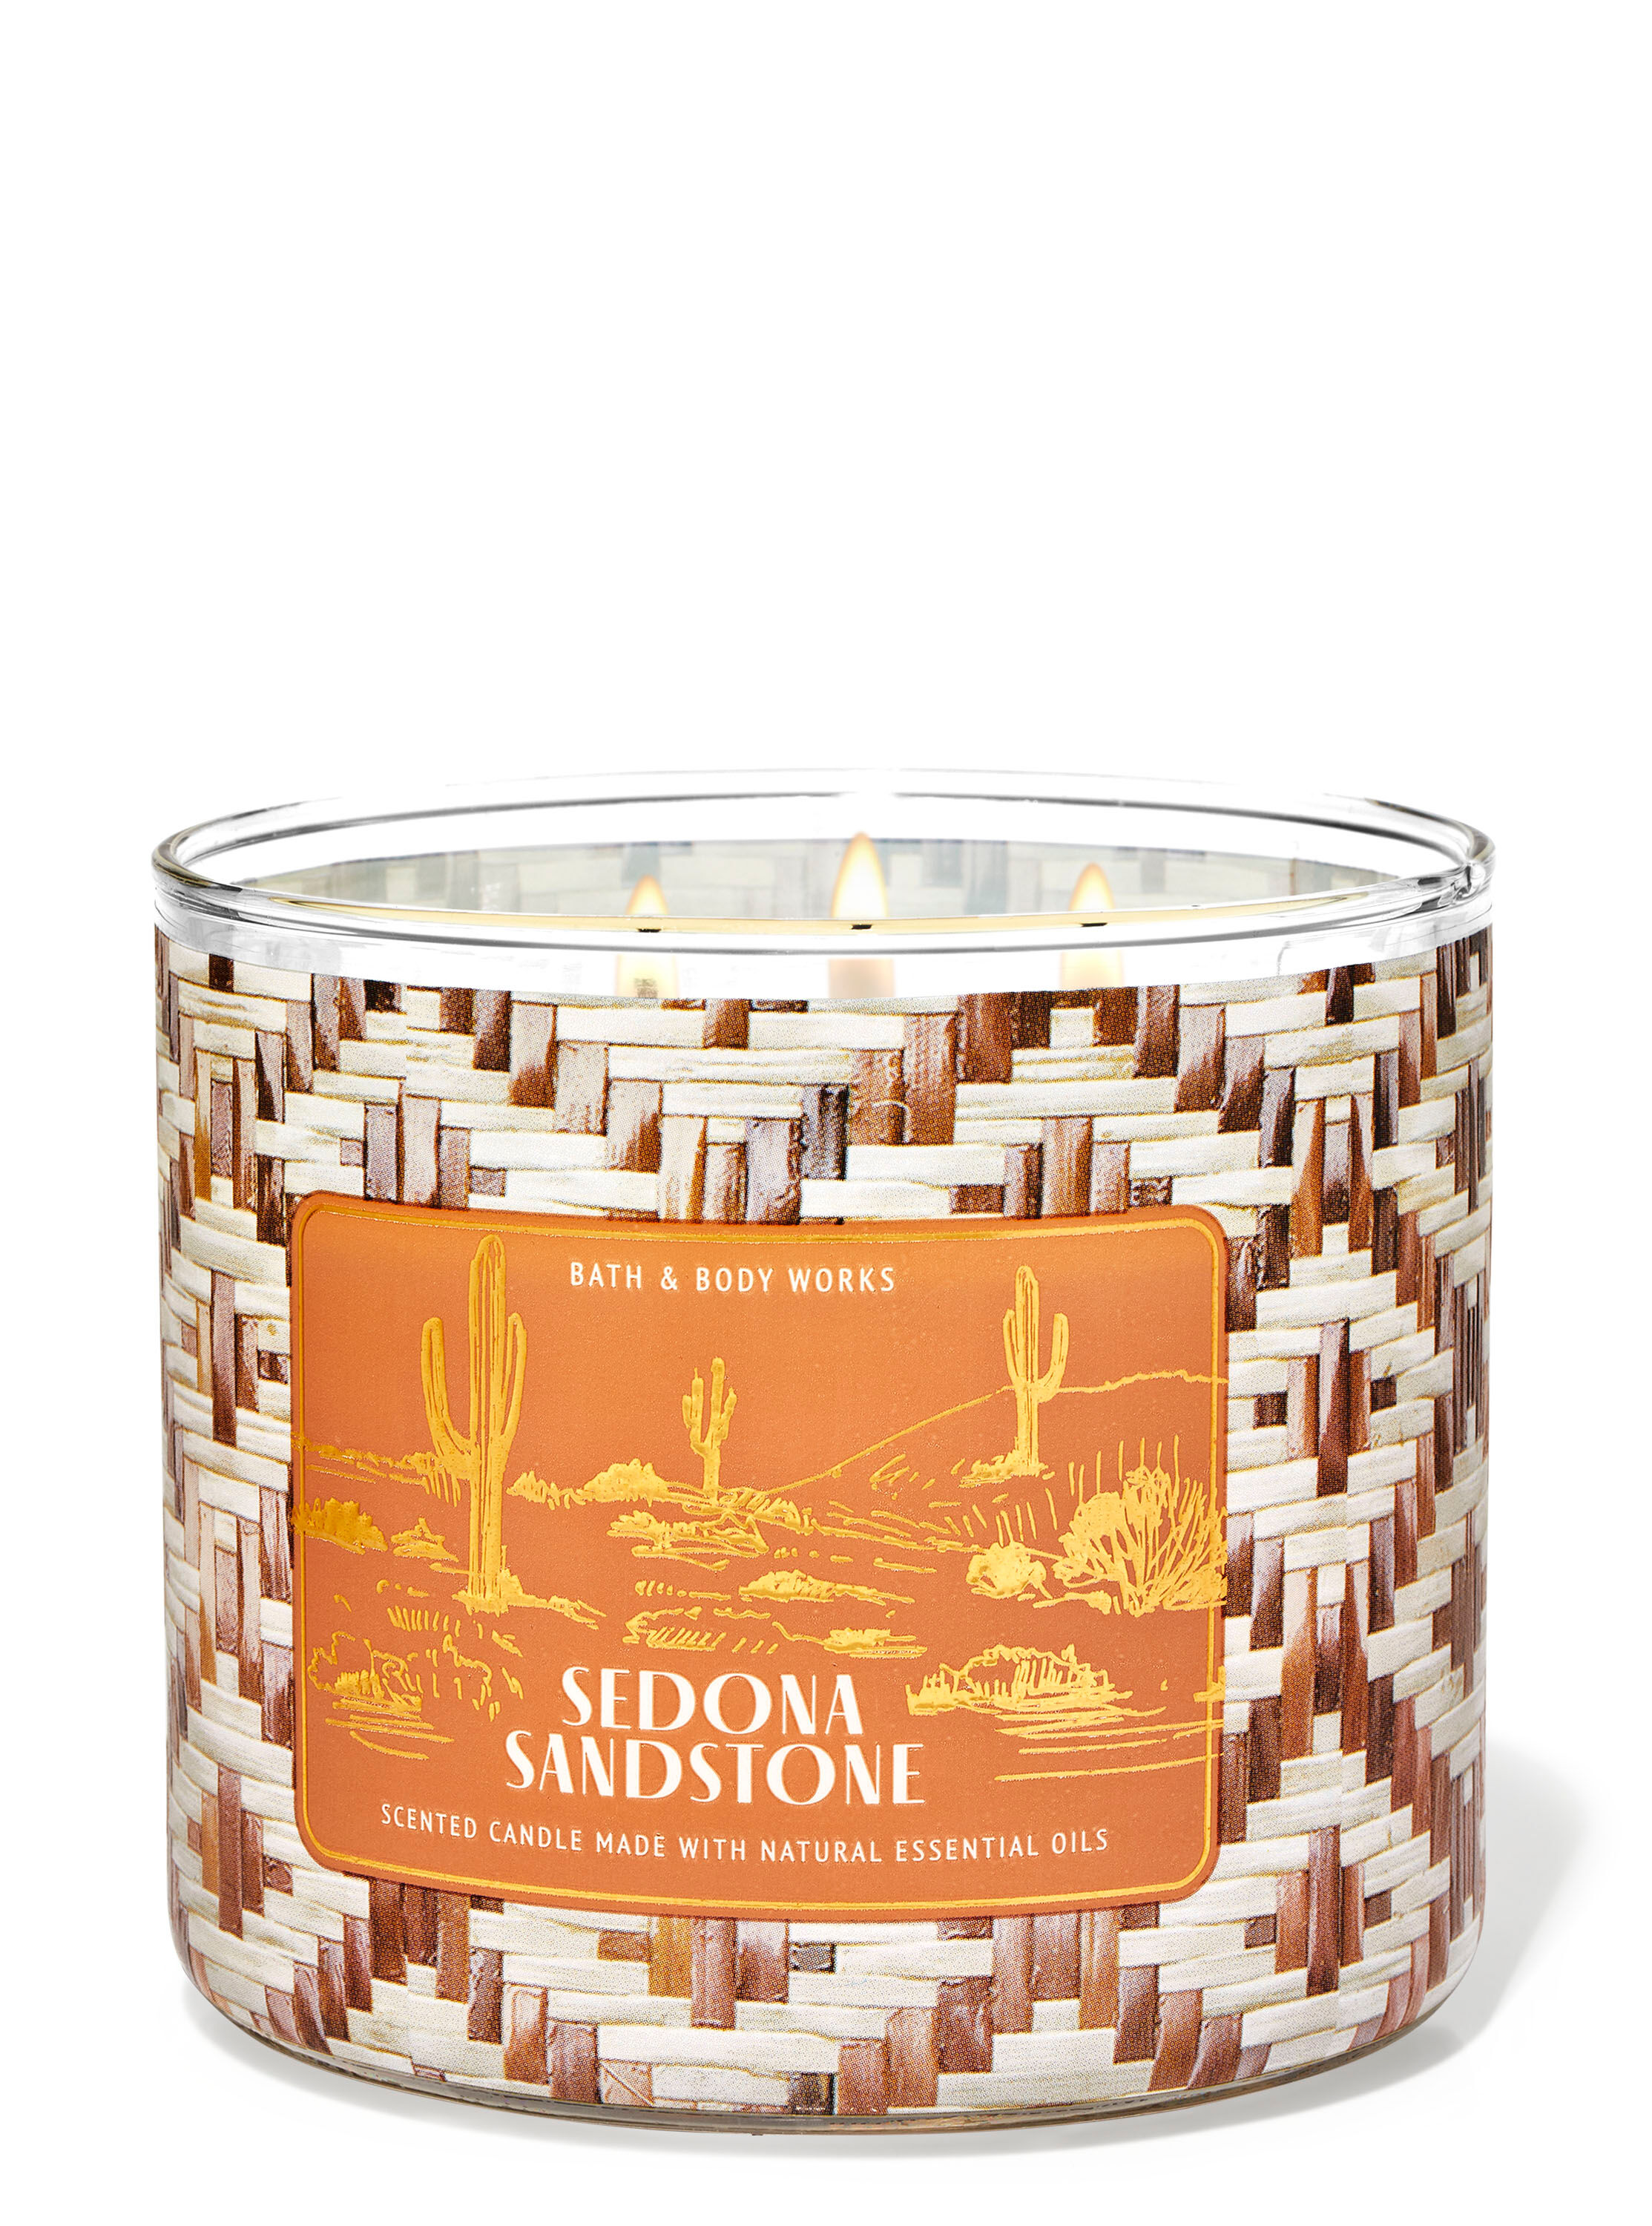 Sedona Sandstone 3-Wick Candle